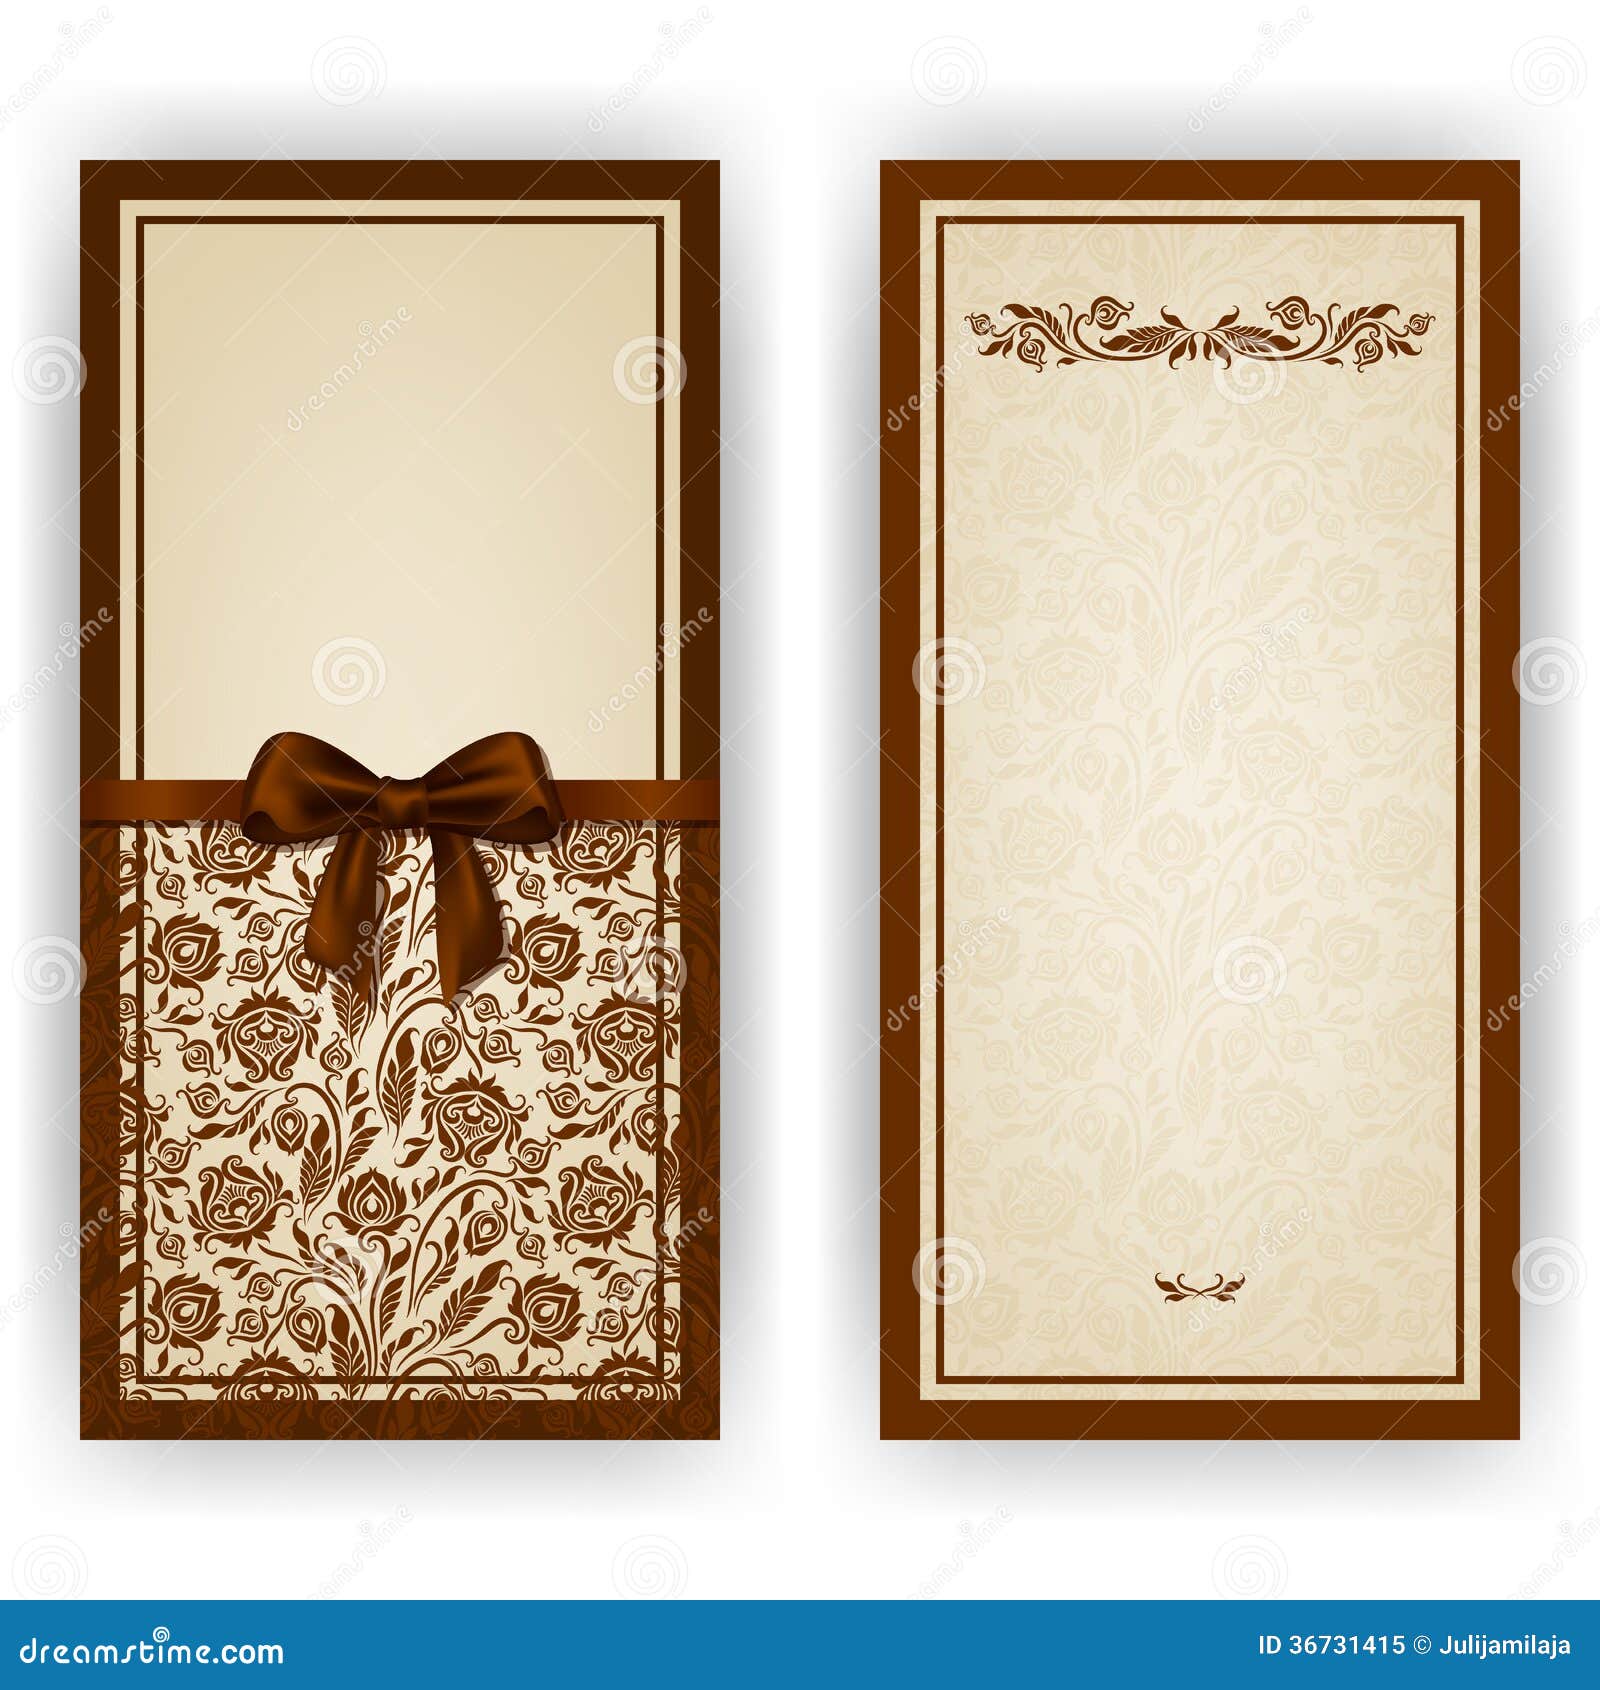 elegant template for invitation, card stock illustration